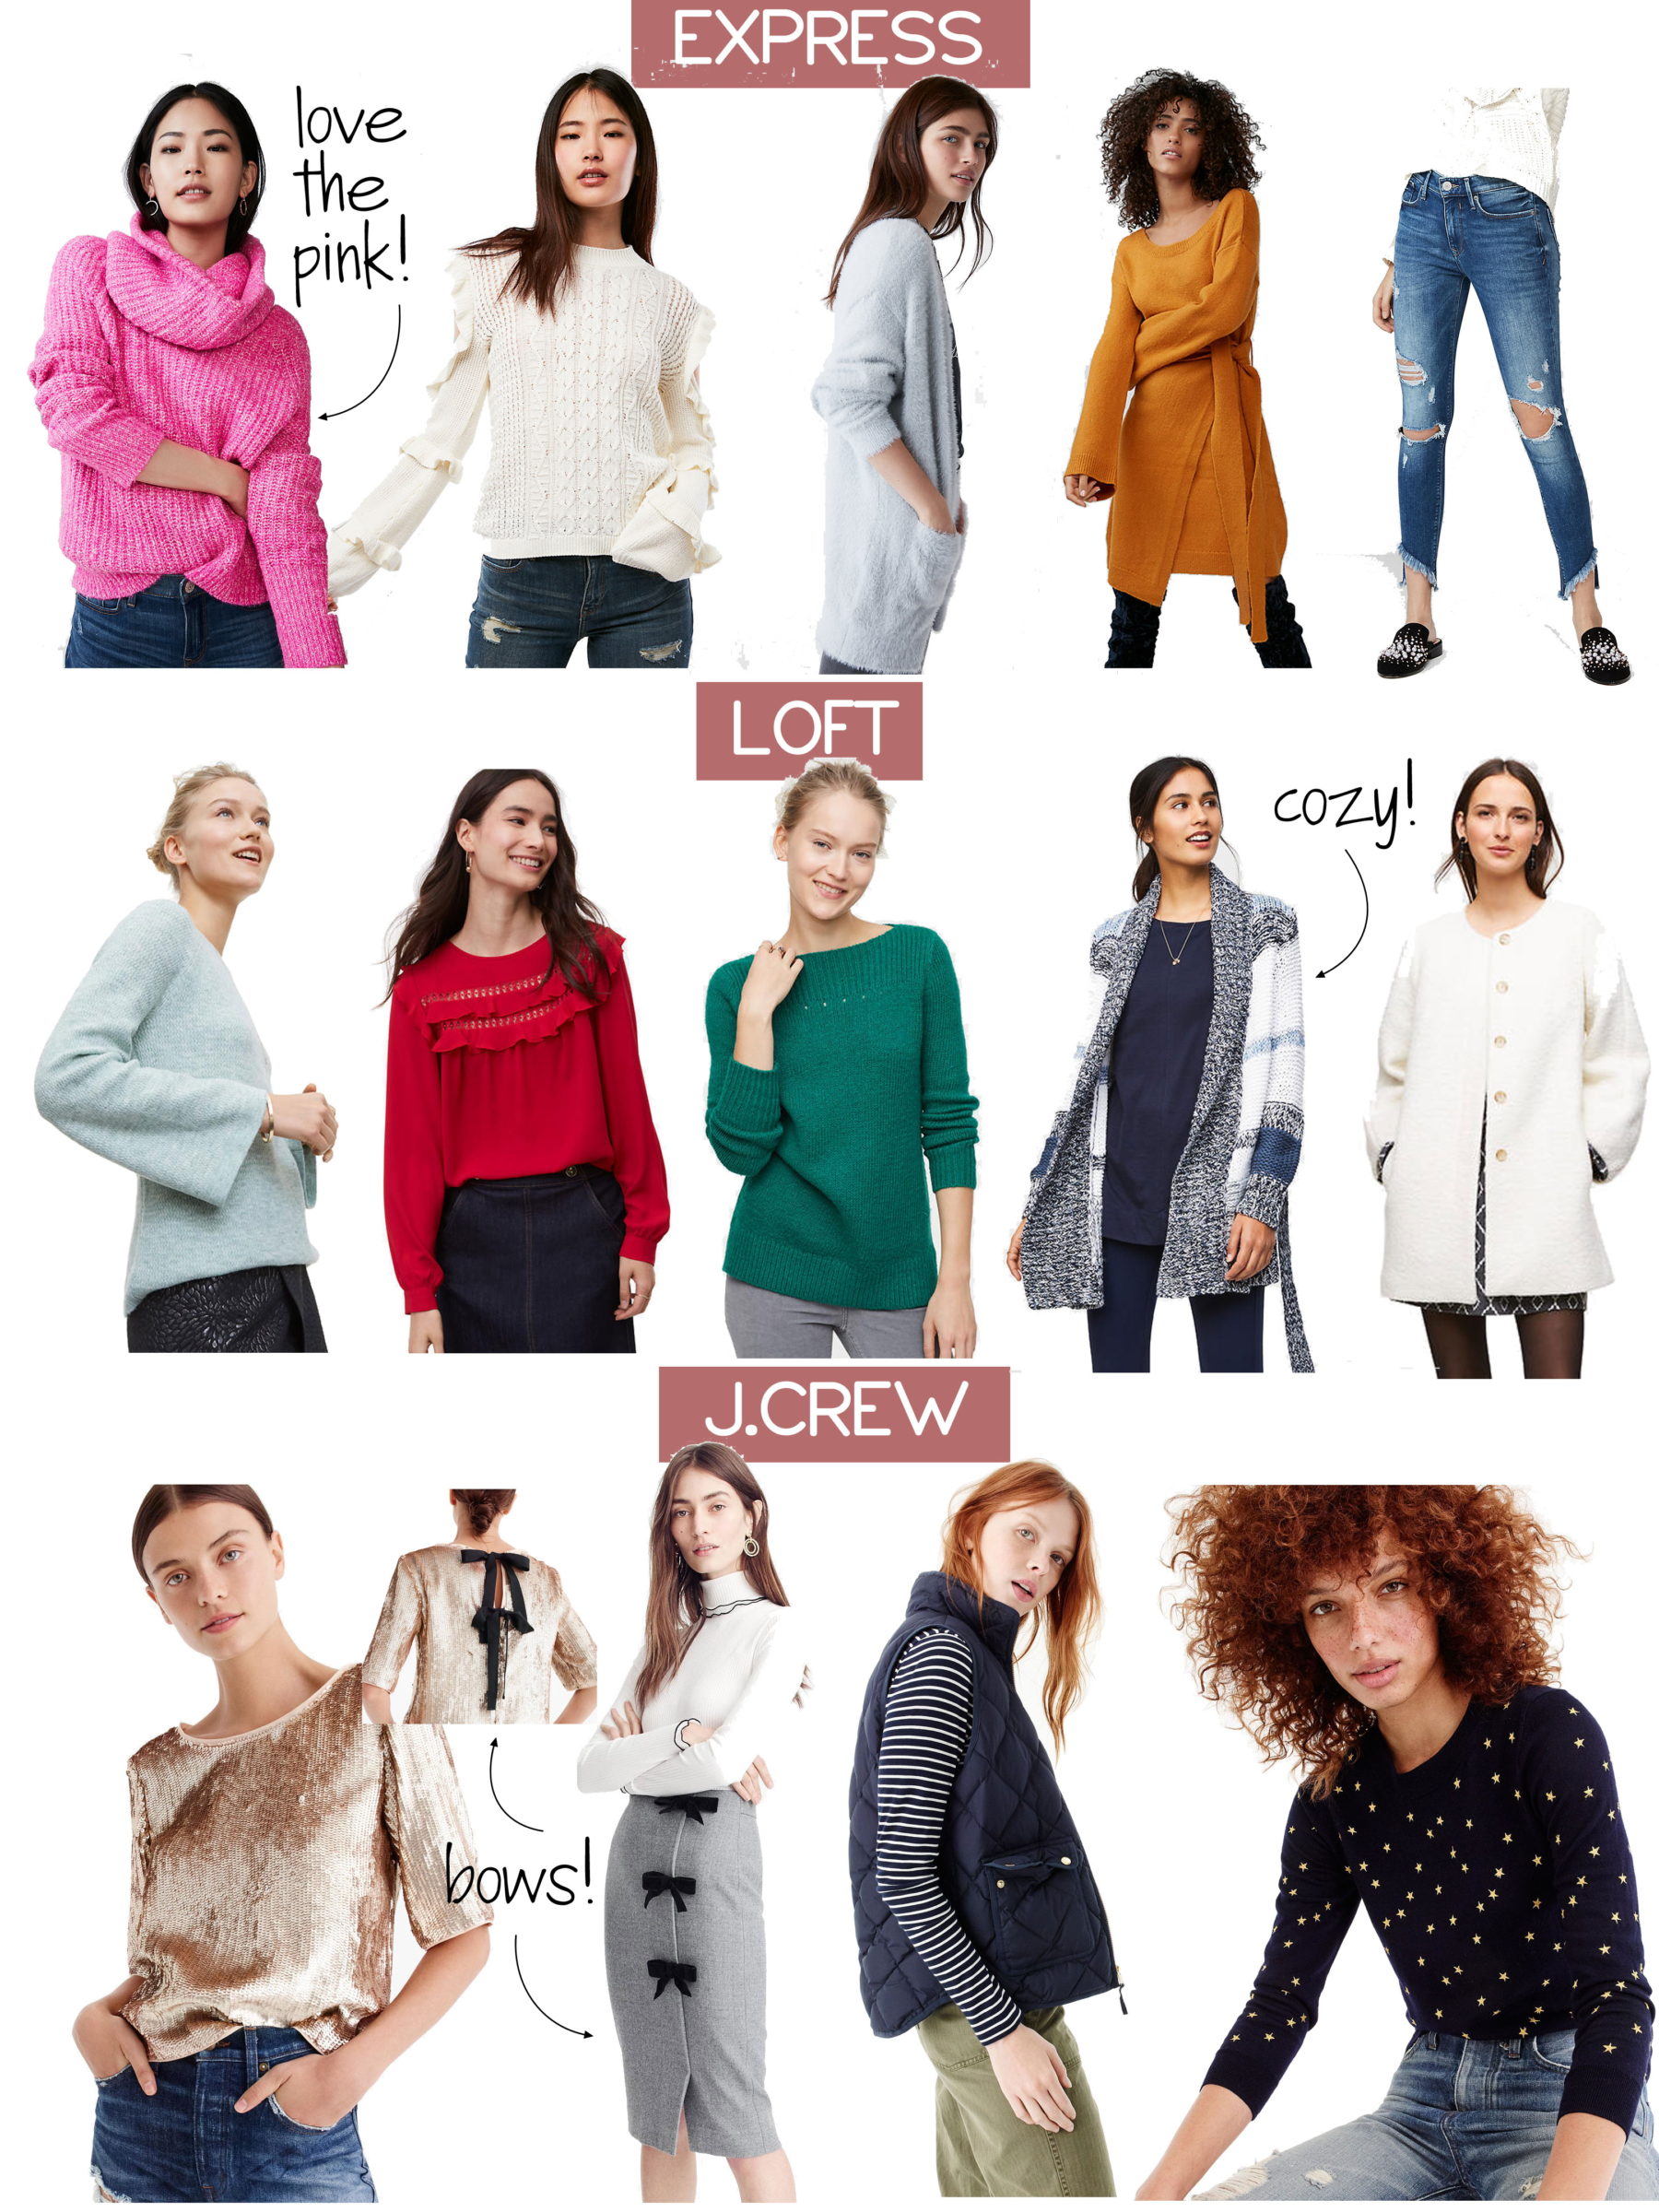 cute & litttle dallas fashion blog | holiday sale collage - Best of Weekend Sales: LOFT, Express, UGG, Stuart Weitzman, J.Crew by Dallas petite fashion blogger cute & little